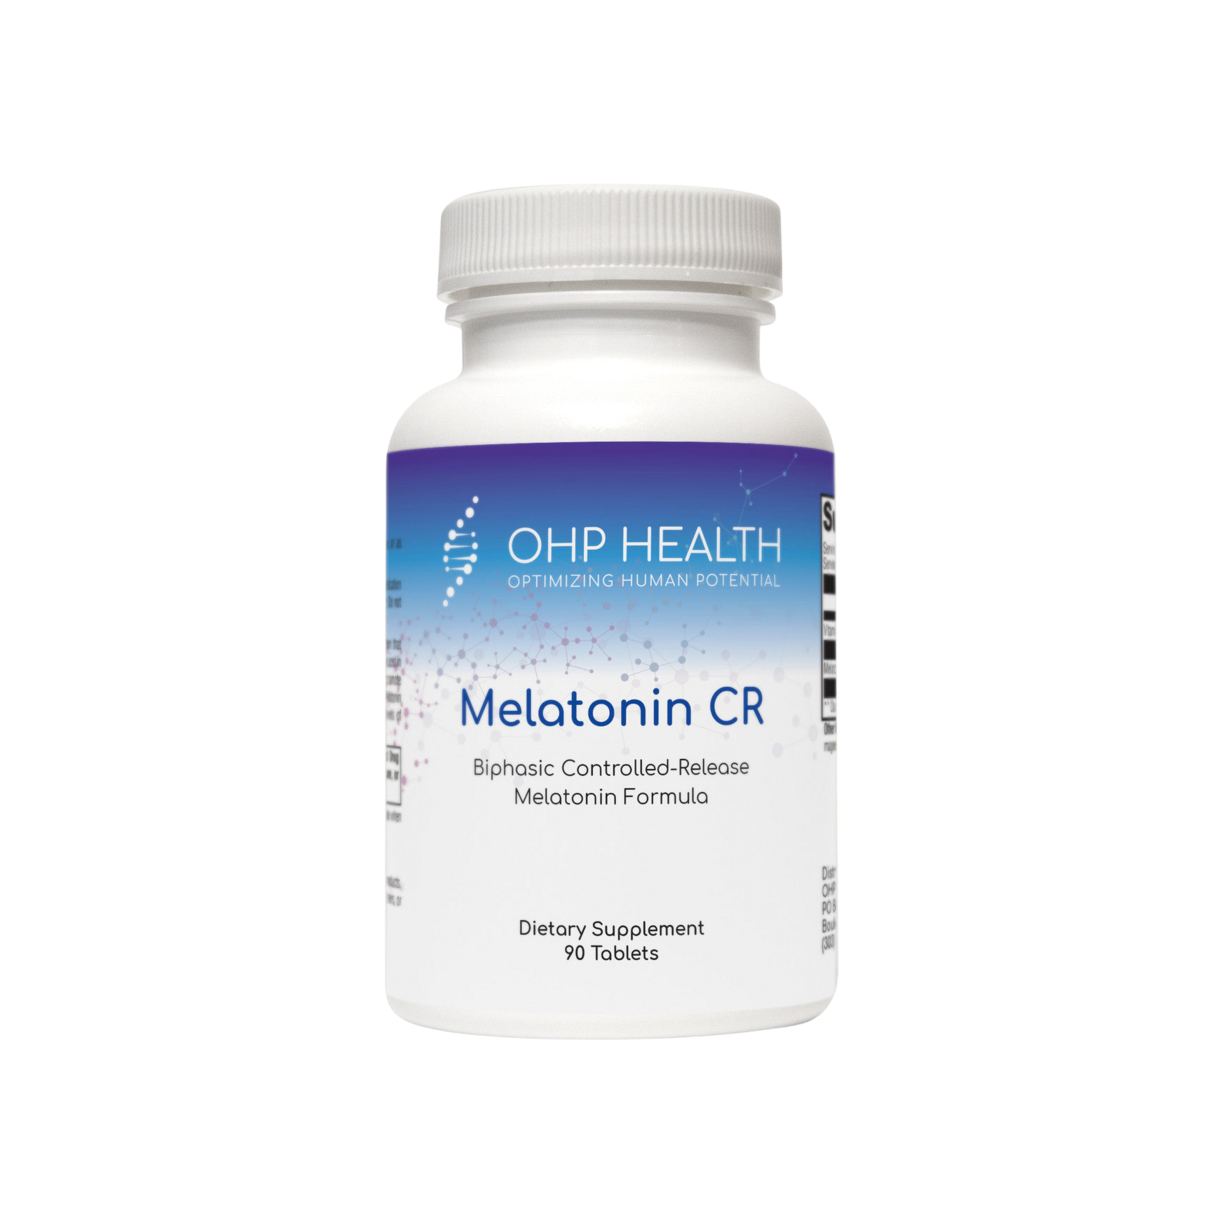 OHP Health's Melatonin CR | 5mg, 90 count